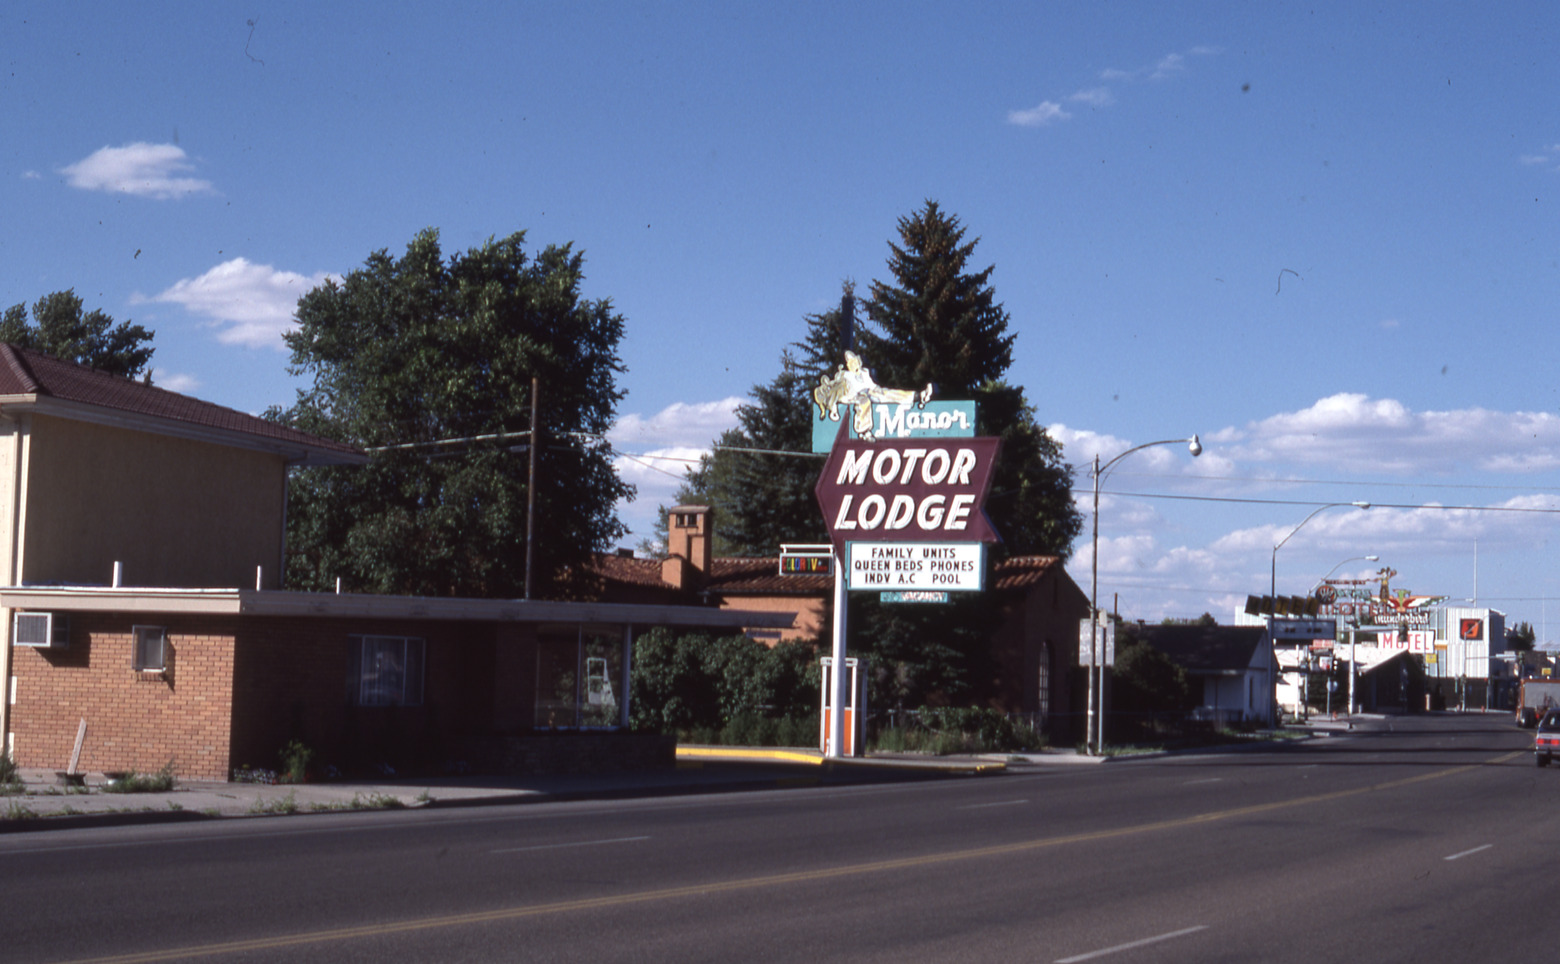 Manor Motor Lodge pylon sign, Elko, Nevada: photographic print